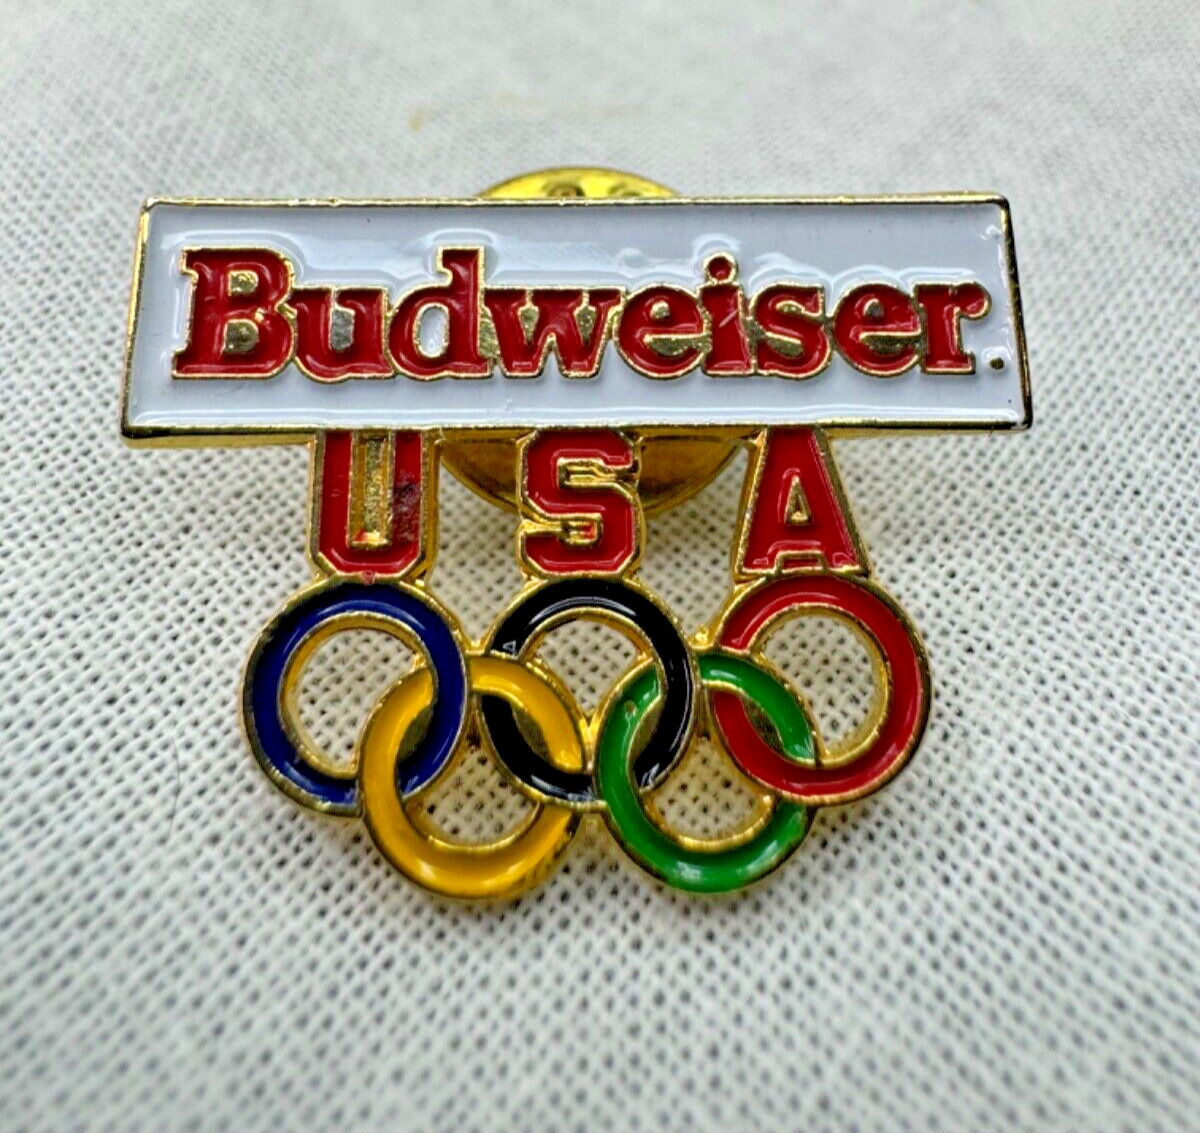 1996 Budweiser USA Olympics Pin